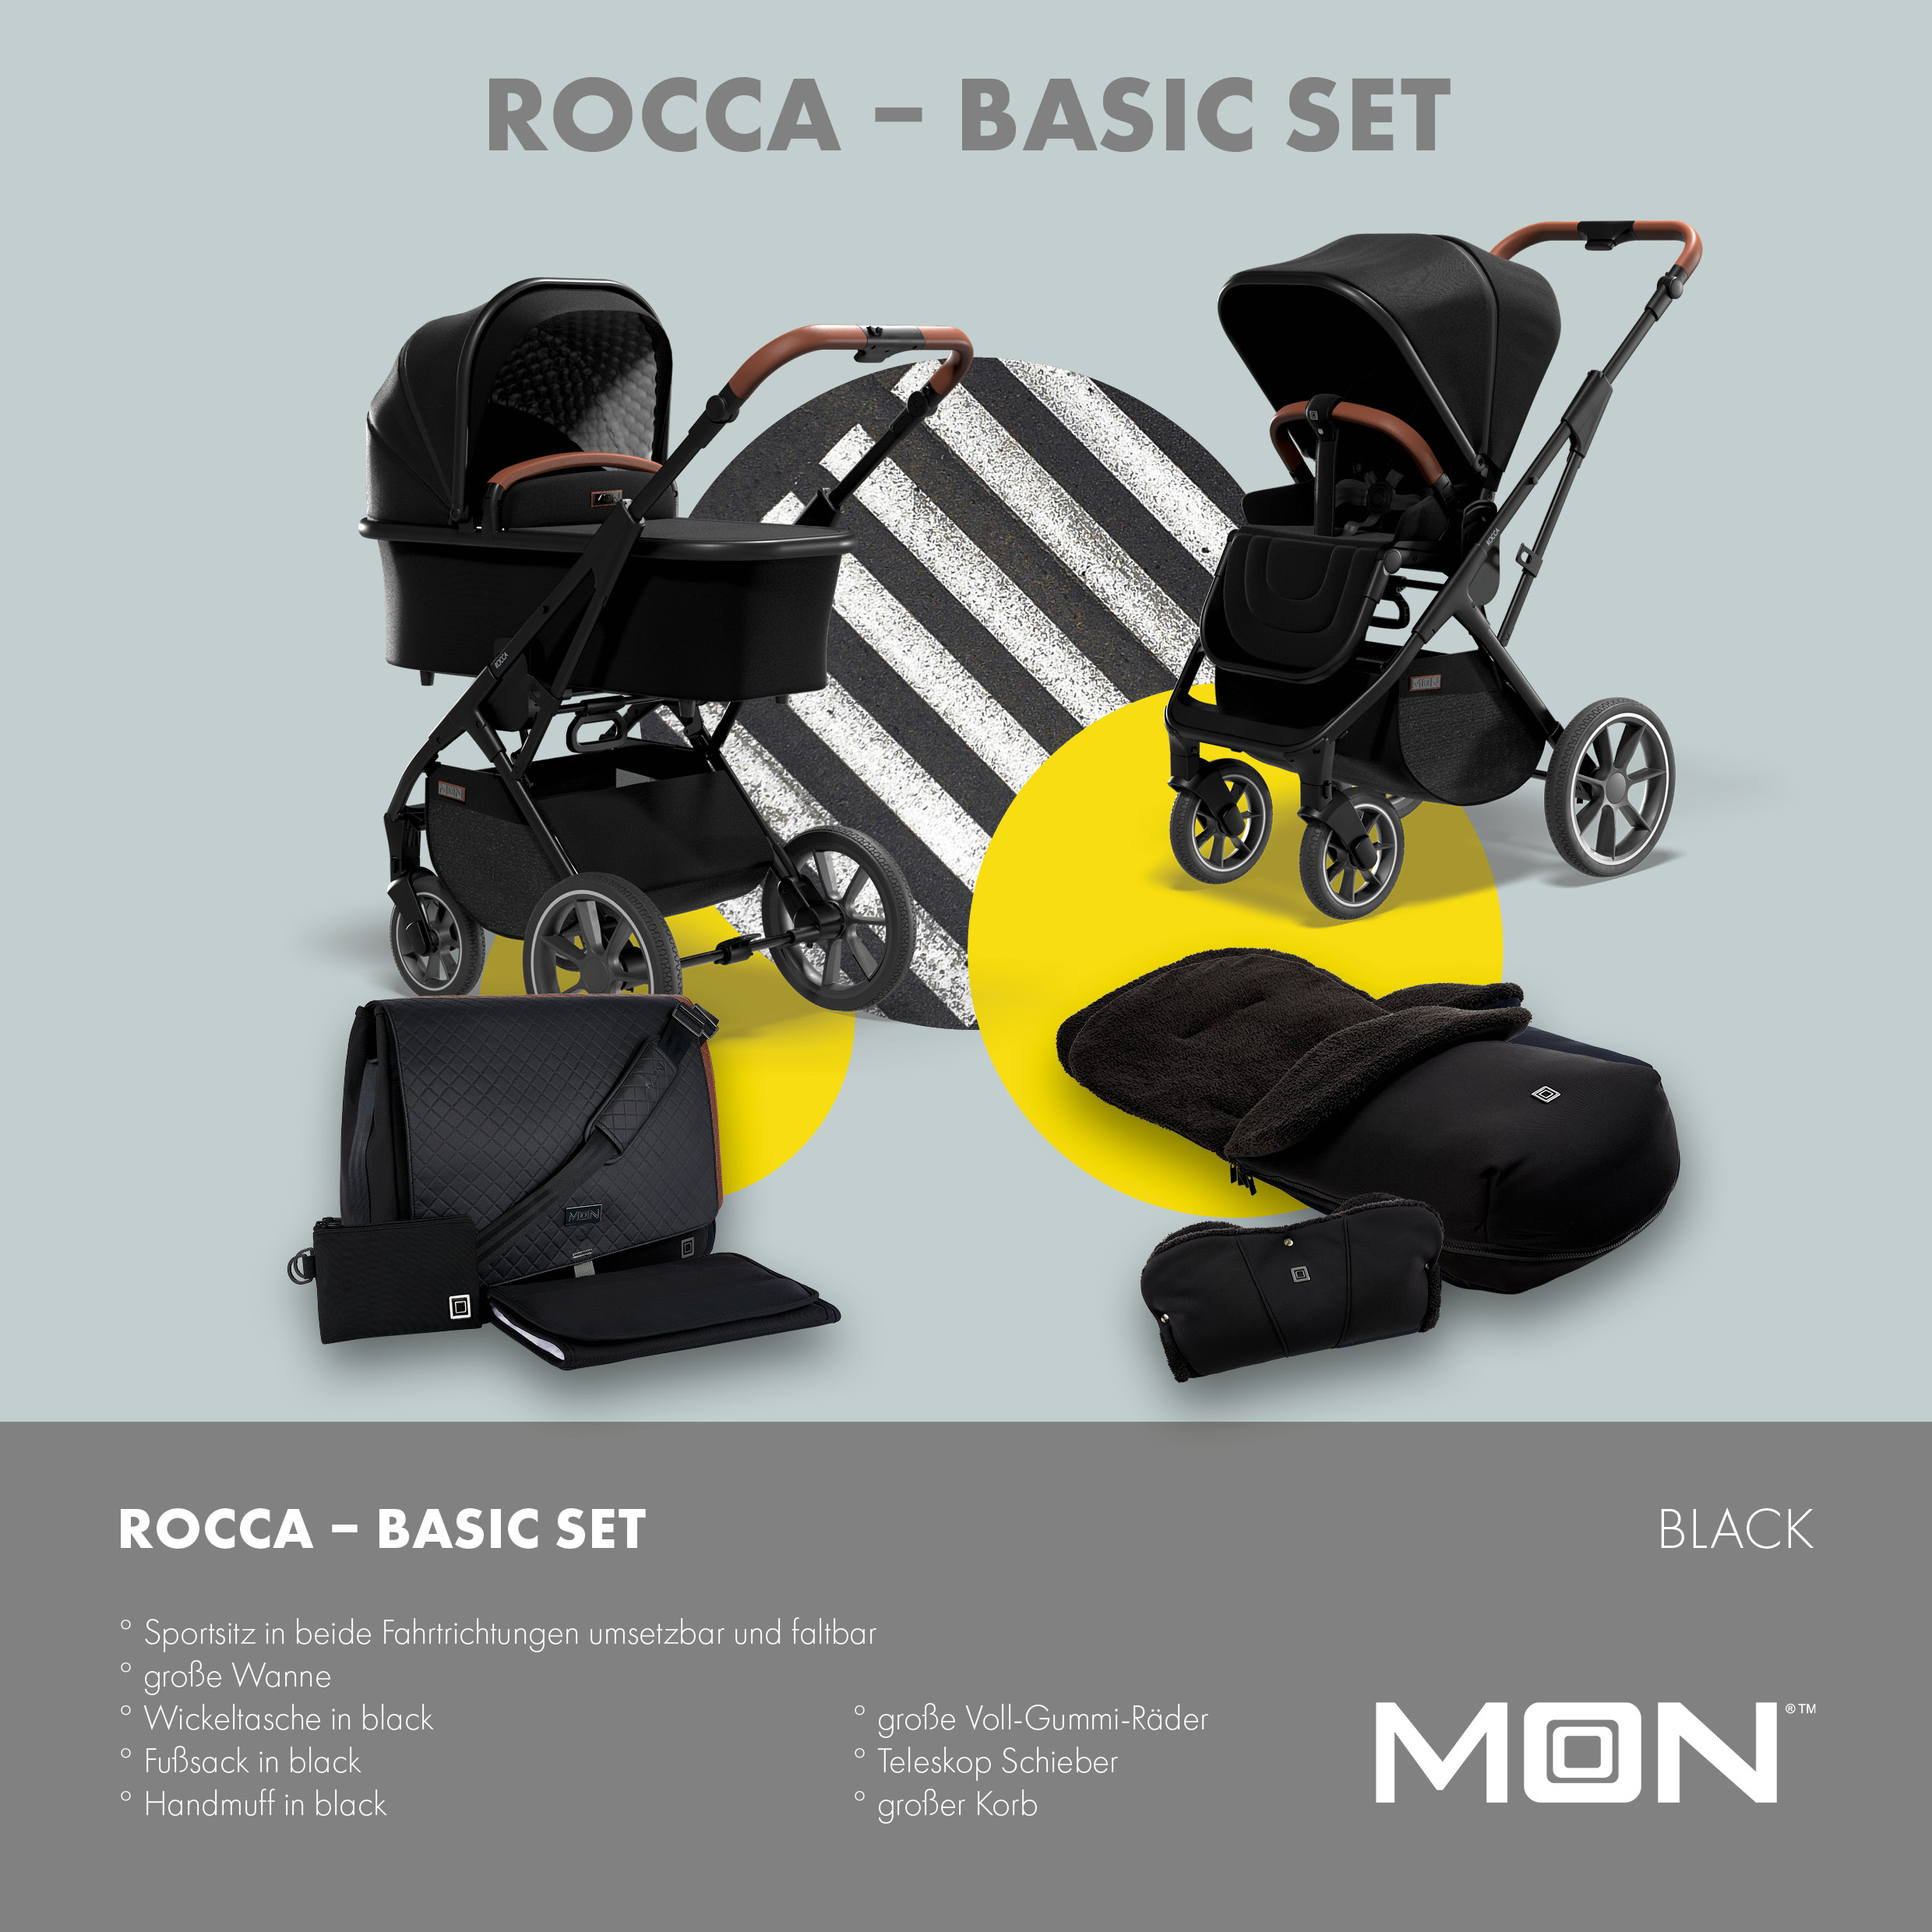 MOON_Rocca_Set-1x1-Black